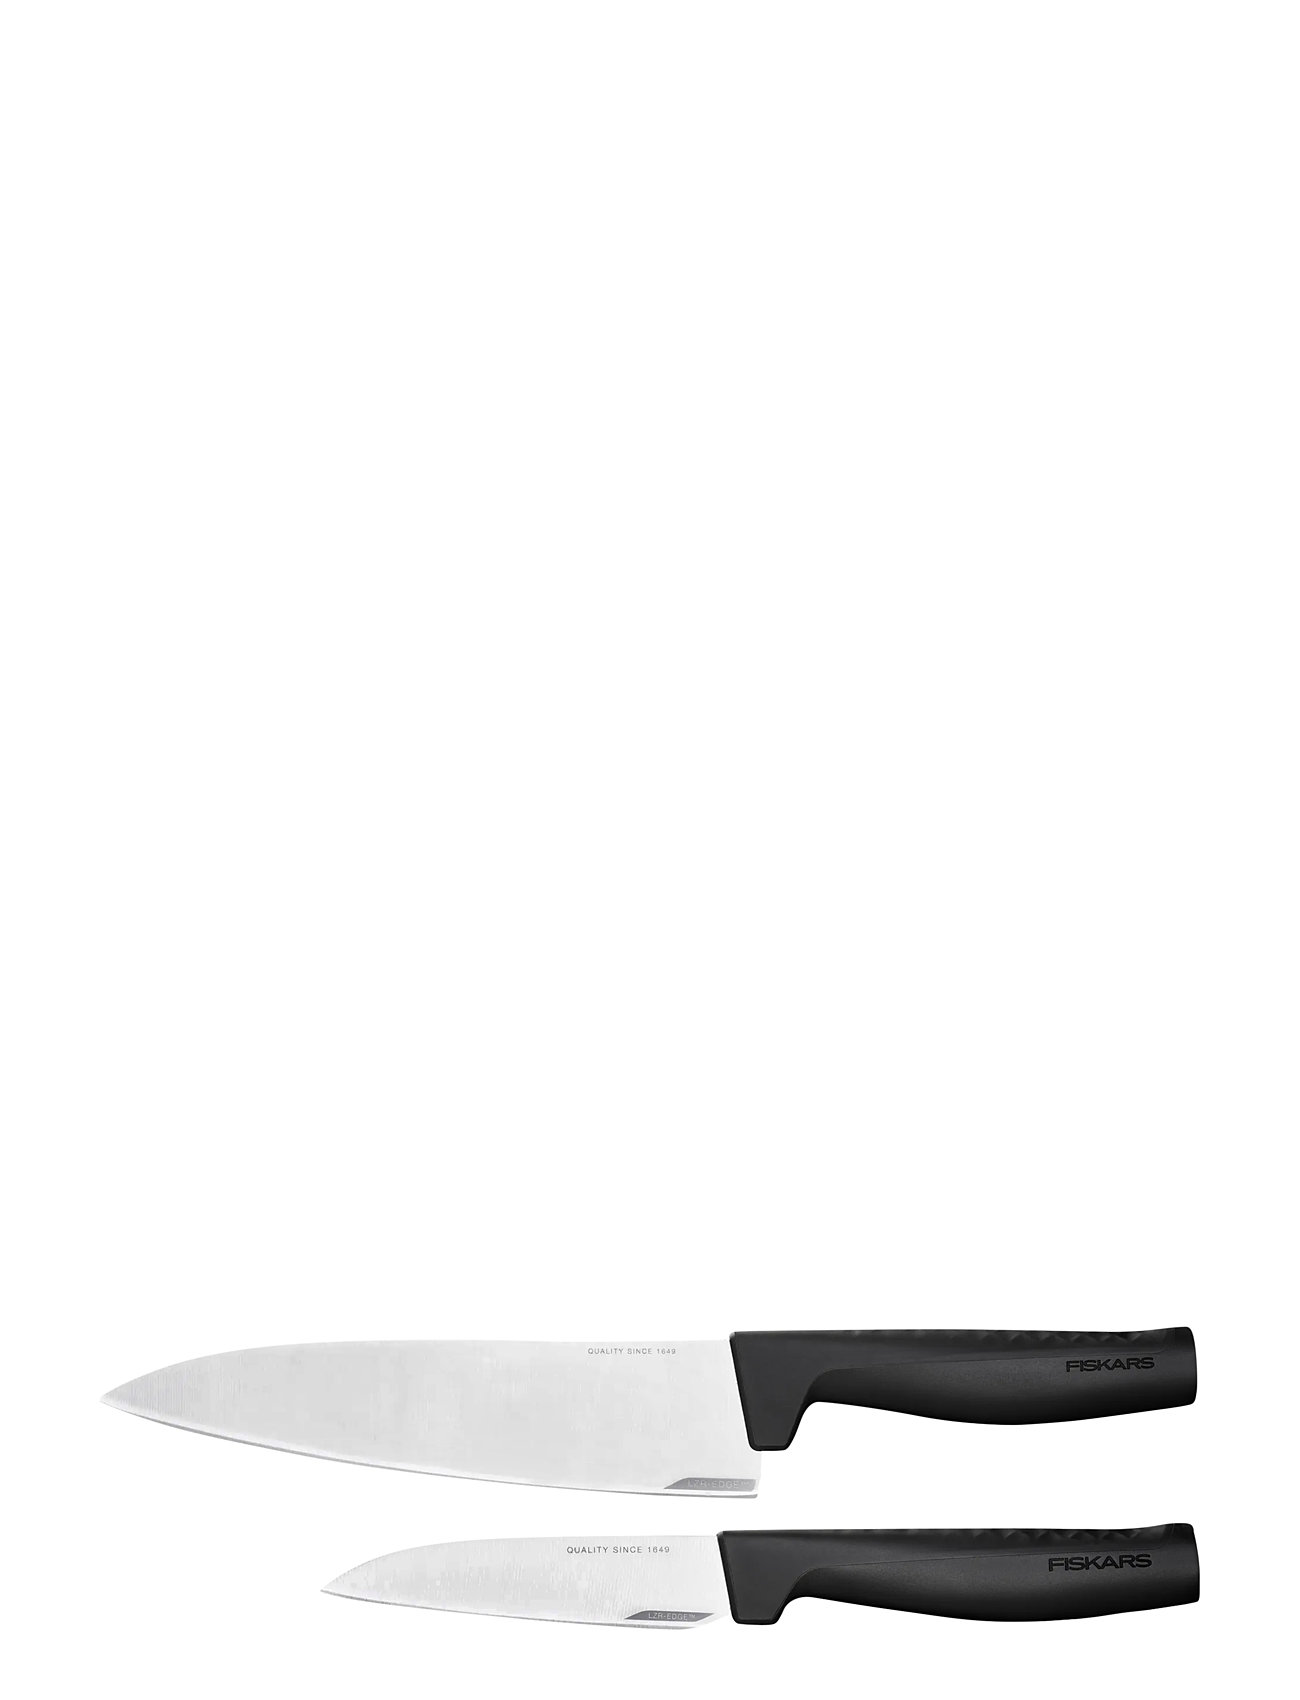 Neuropathie wraak Sherlock Holmes Fiskars Hard Edge Knivset 2 Parts - Large Chef Knife & Vegetable Knife  (Black), (52.56 €) | Large selection of outlet-styles | Booztlet.com